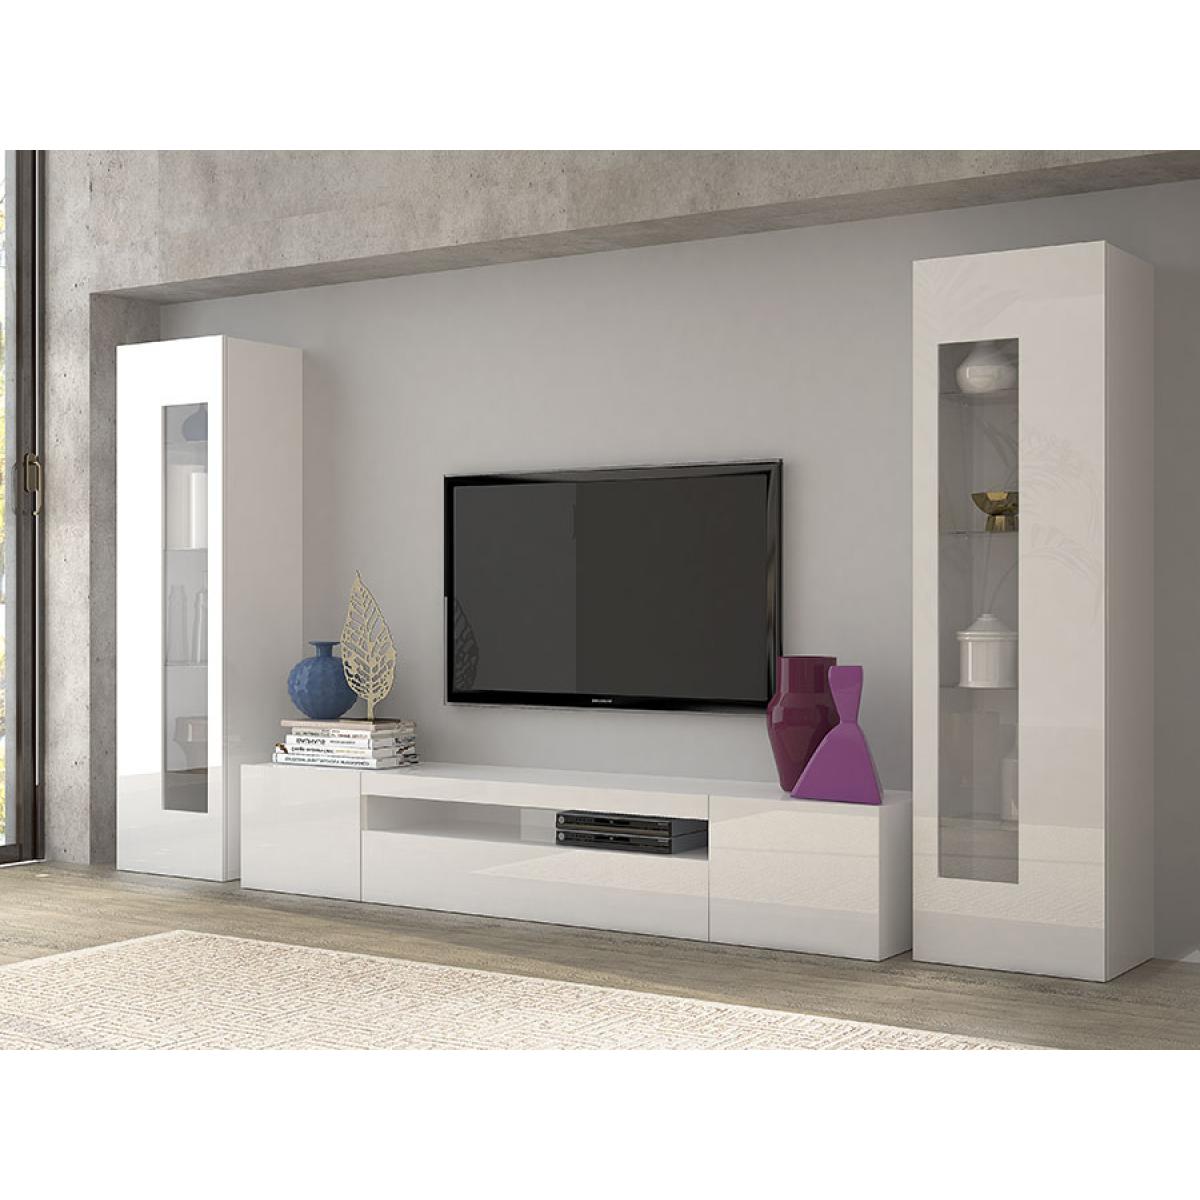 Kasalinea - Ensemble meuble TV laqué blanc brillant design ROSALI - Meubles TV, Hi-Fi